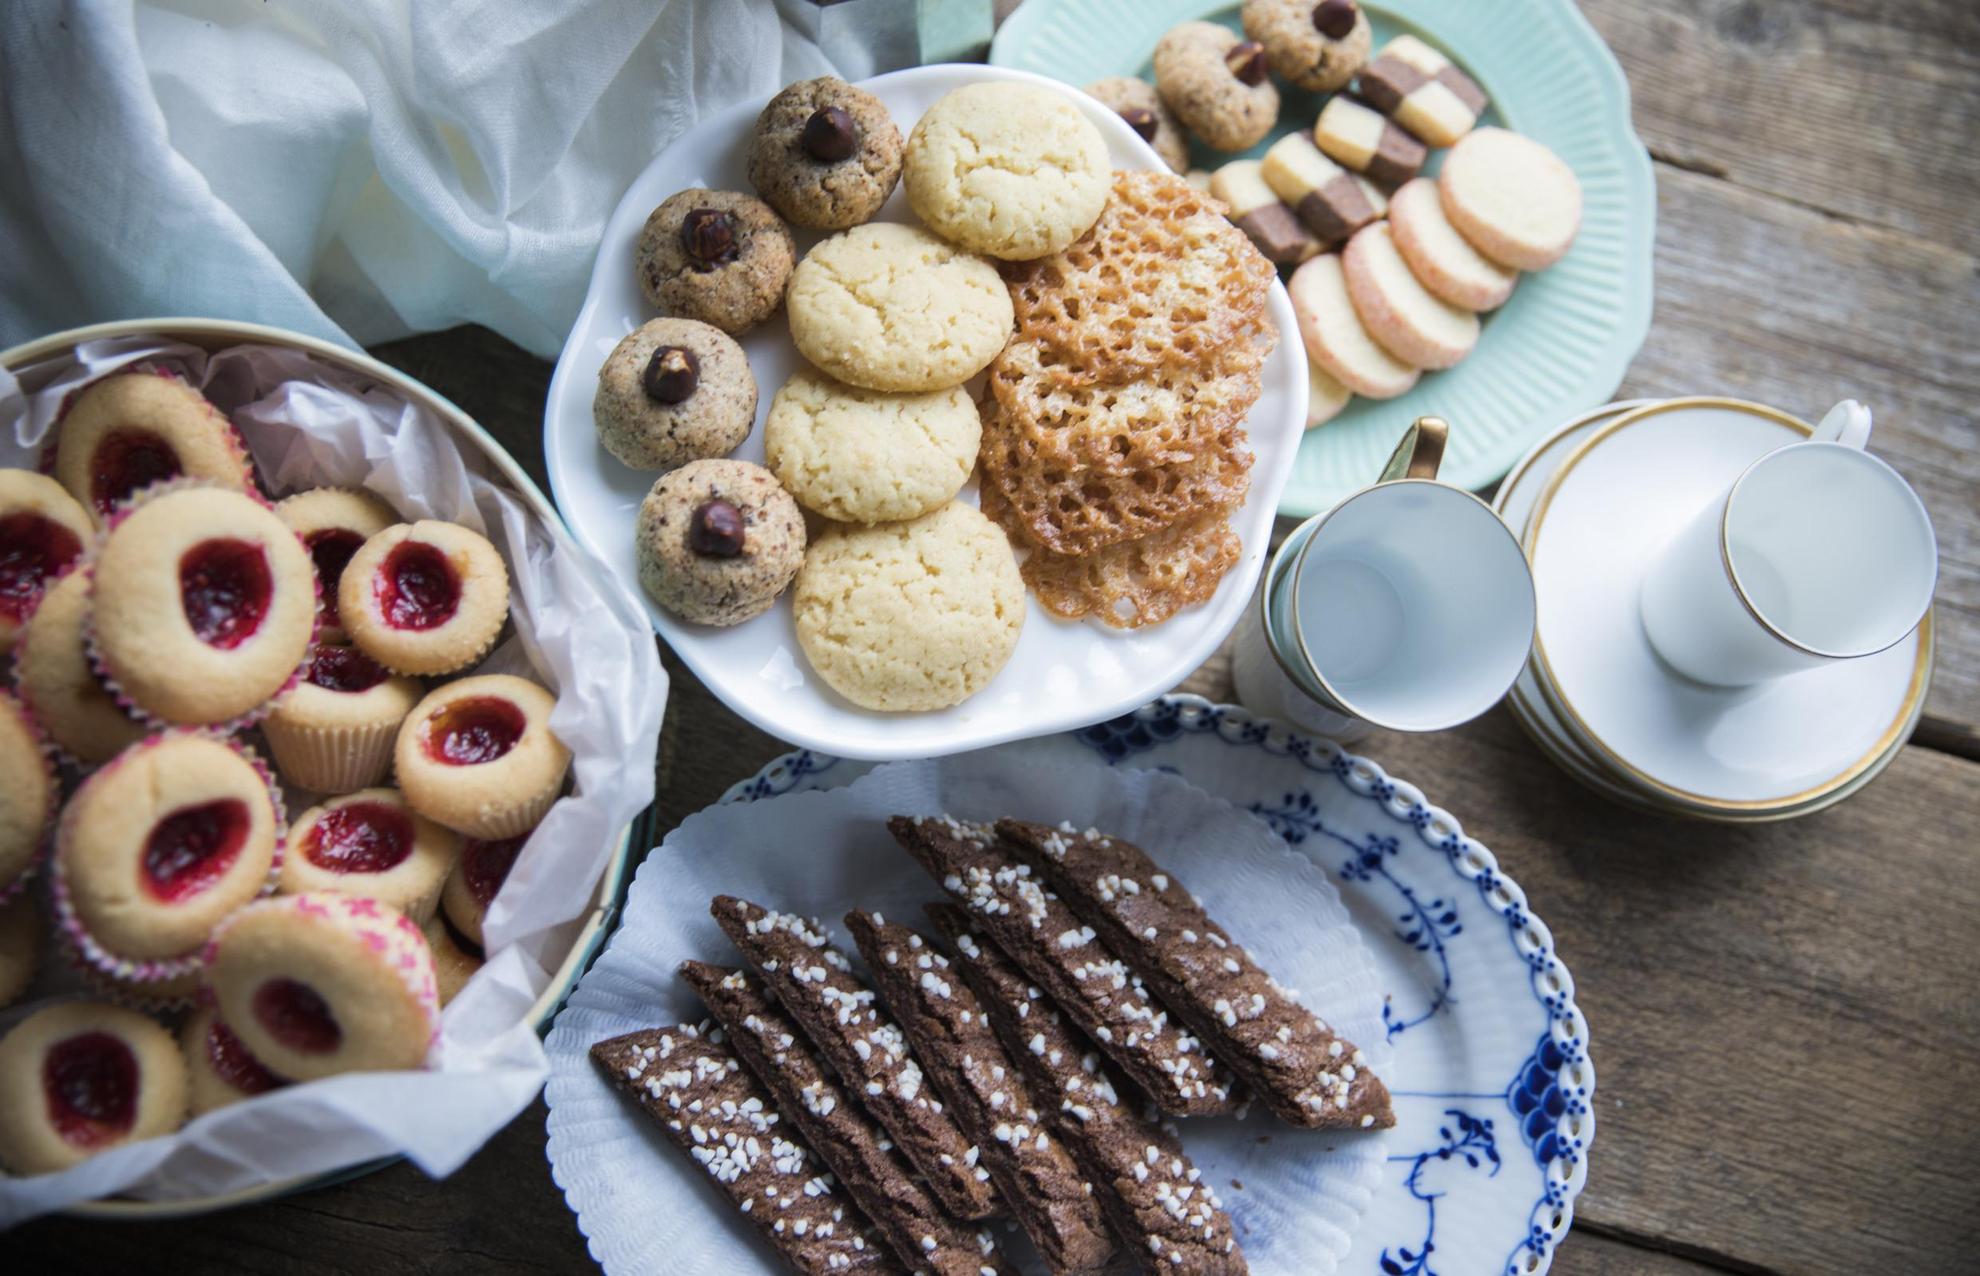 Seven kinds of Swedish cookies